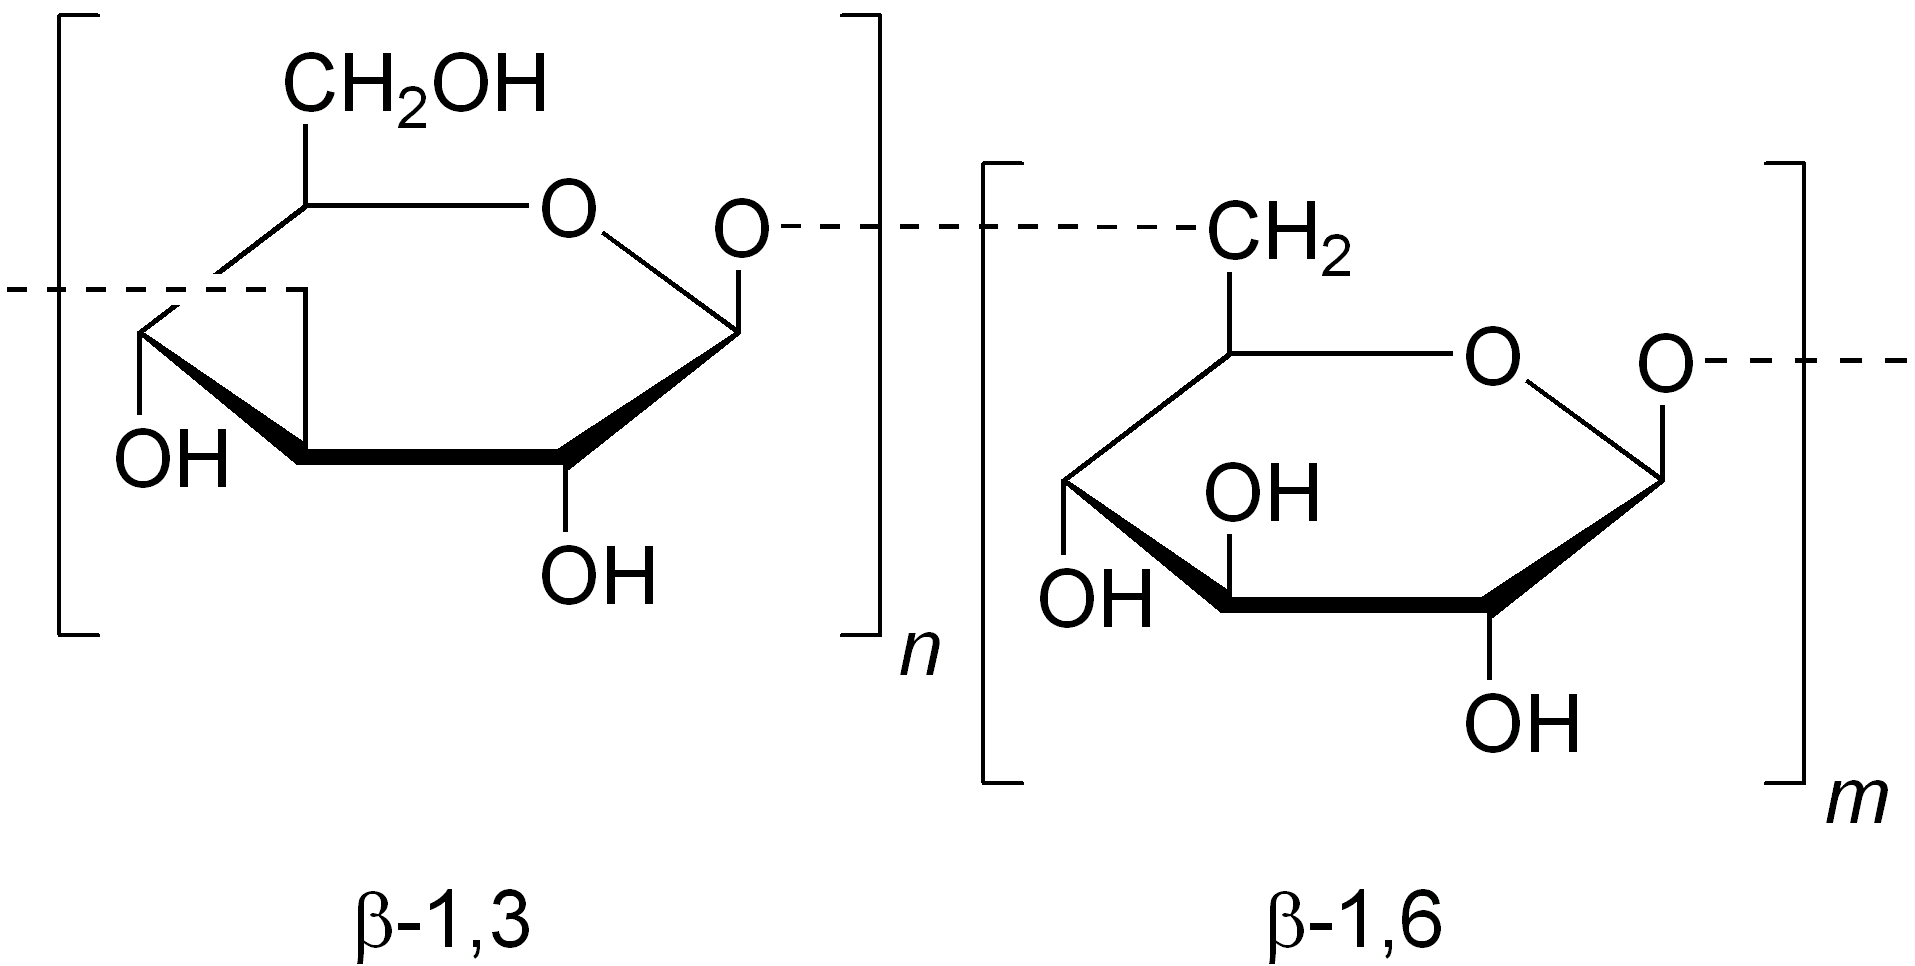 Beta-1,3/1,6-glucan